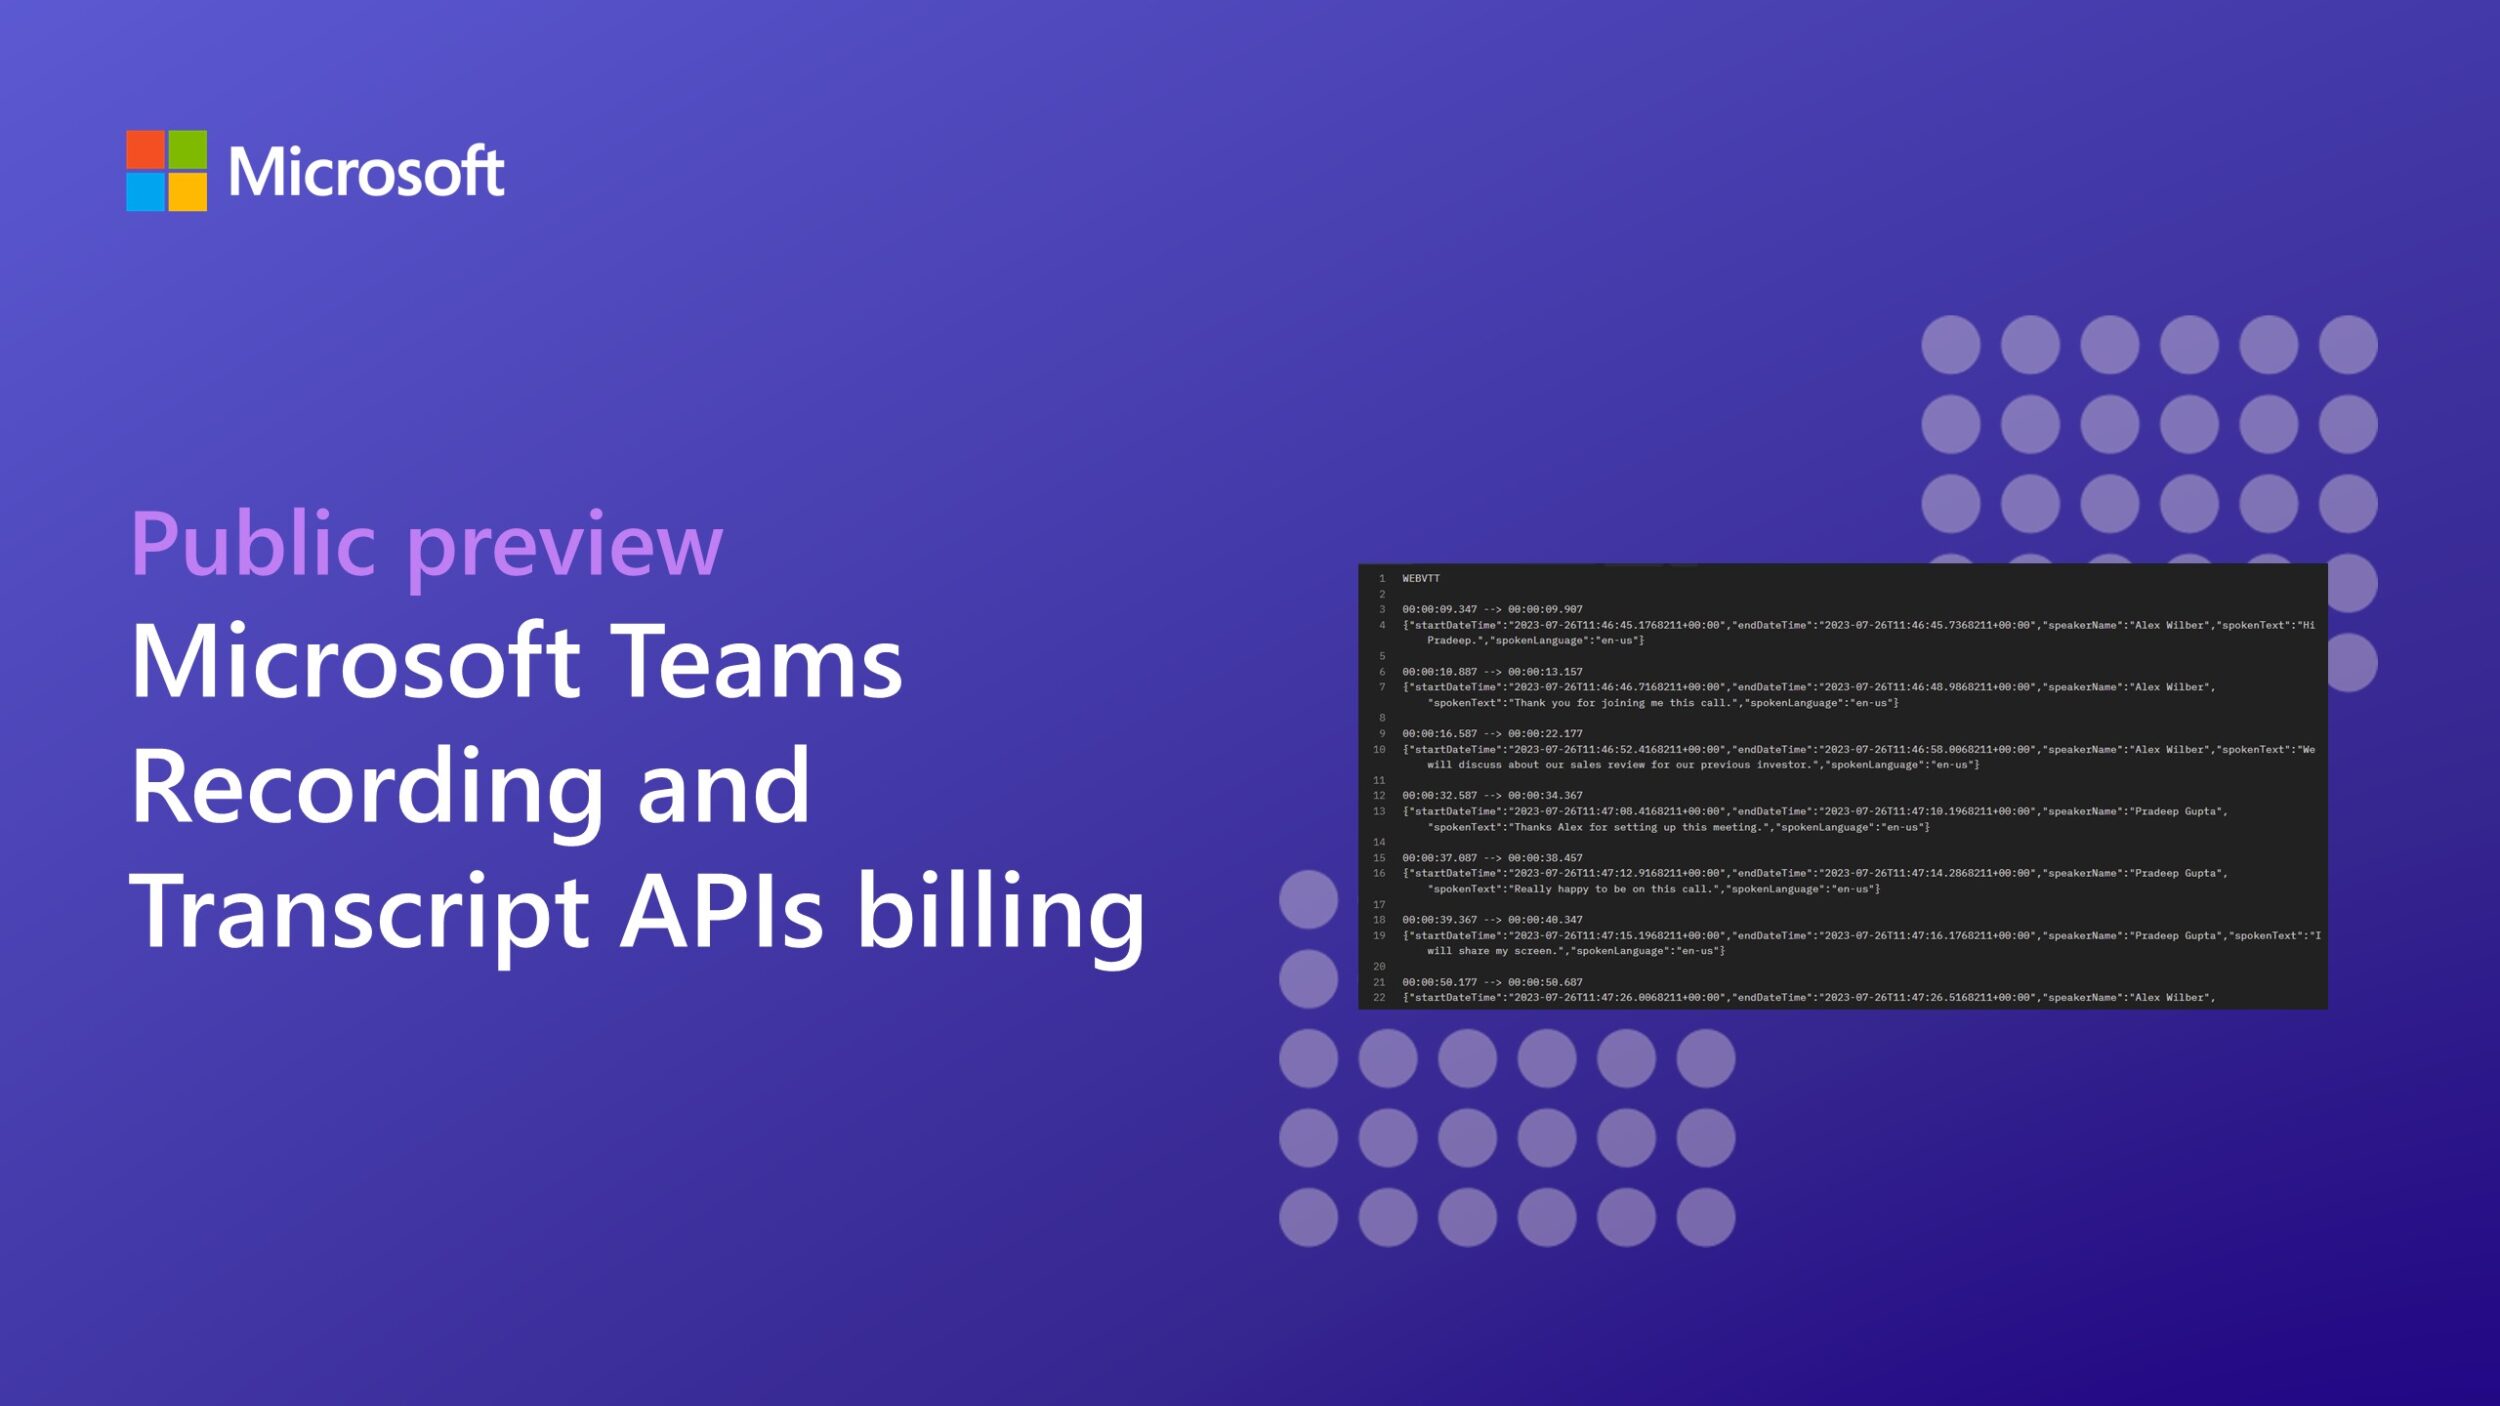 Microsoft Teams Recording and Transcript APIs billing in public preview